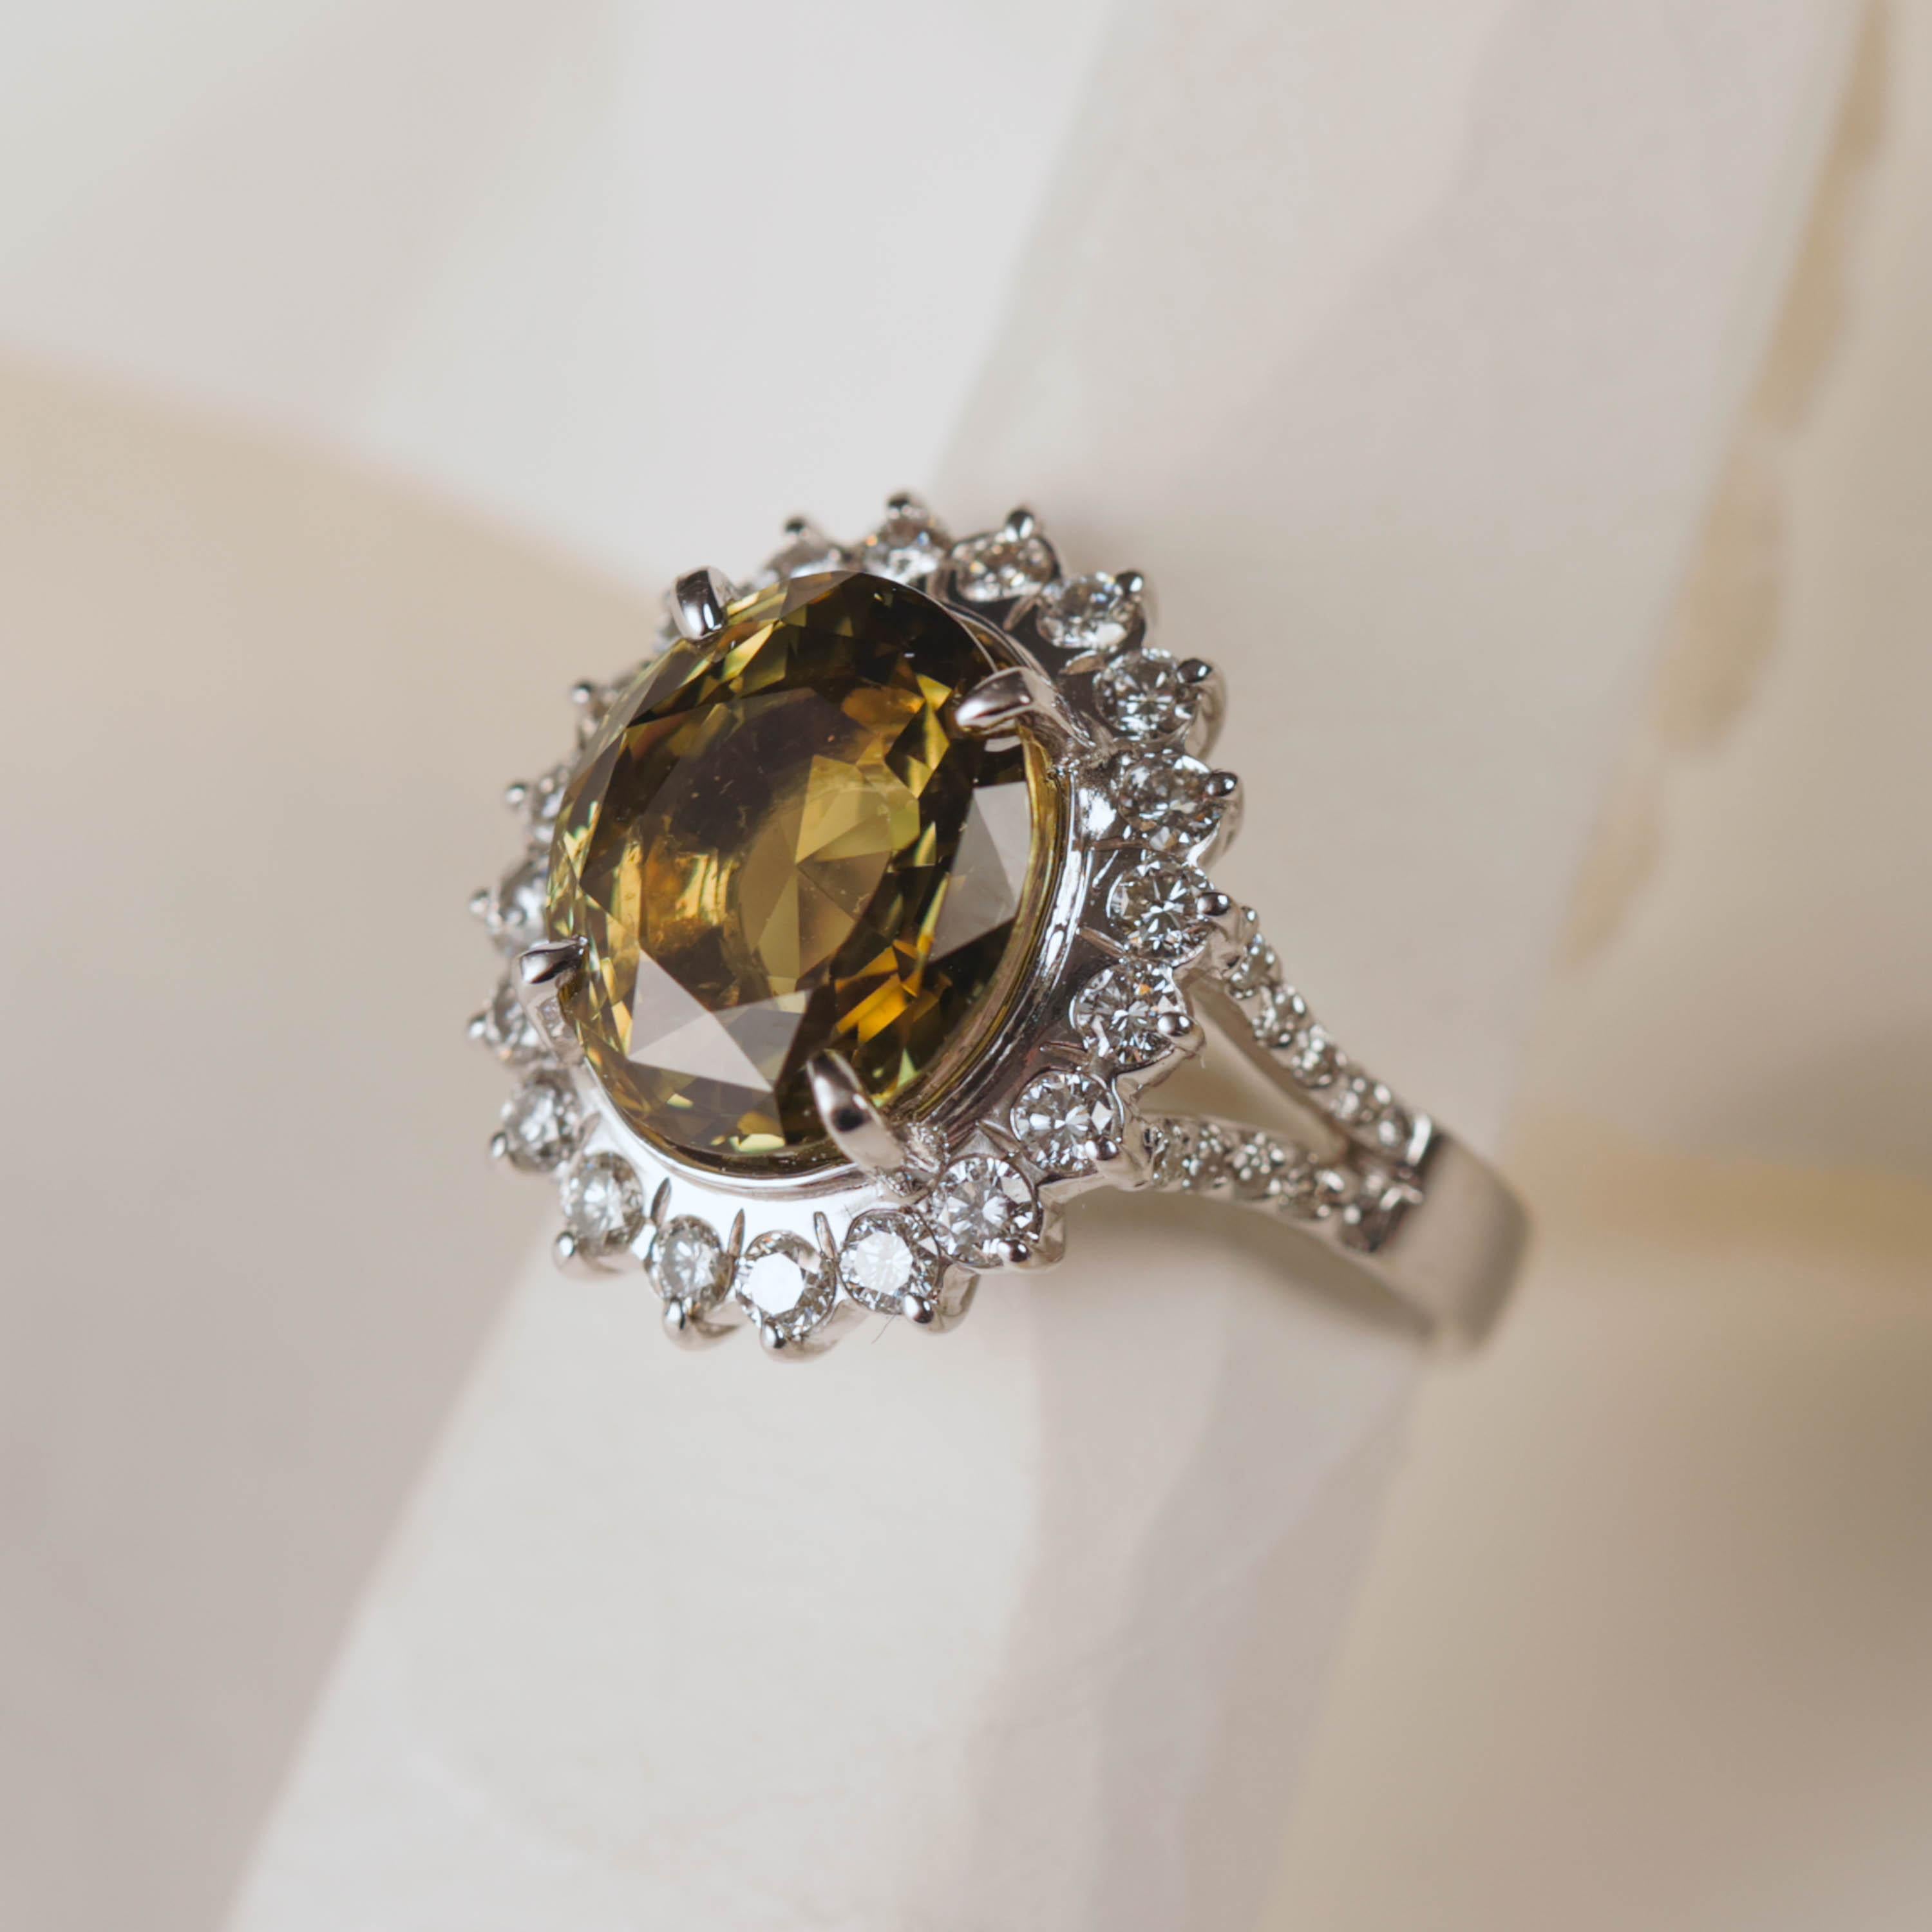 Alexandrite & Diamond Ring 7.35 Carats, Rare Color Change Gem Certified 3